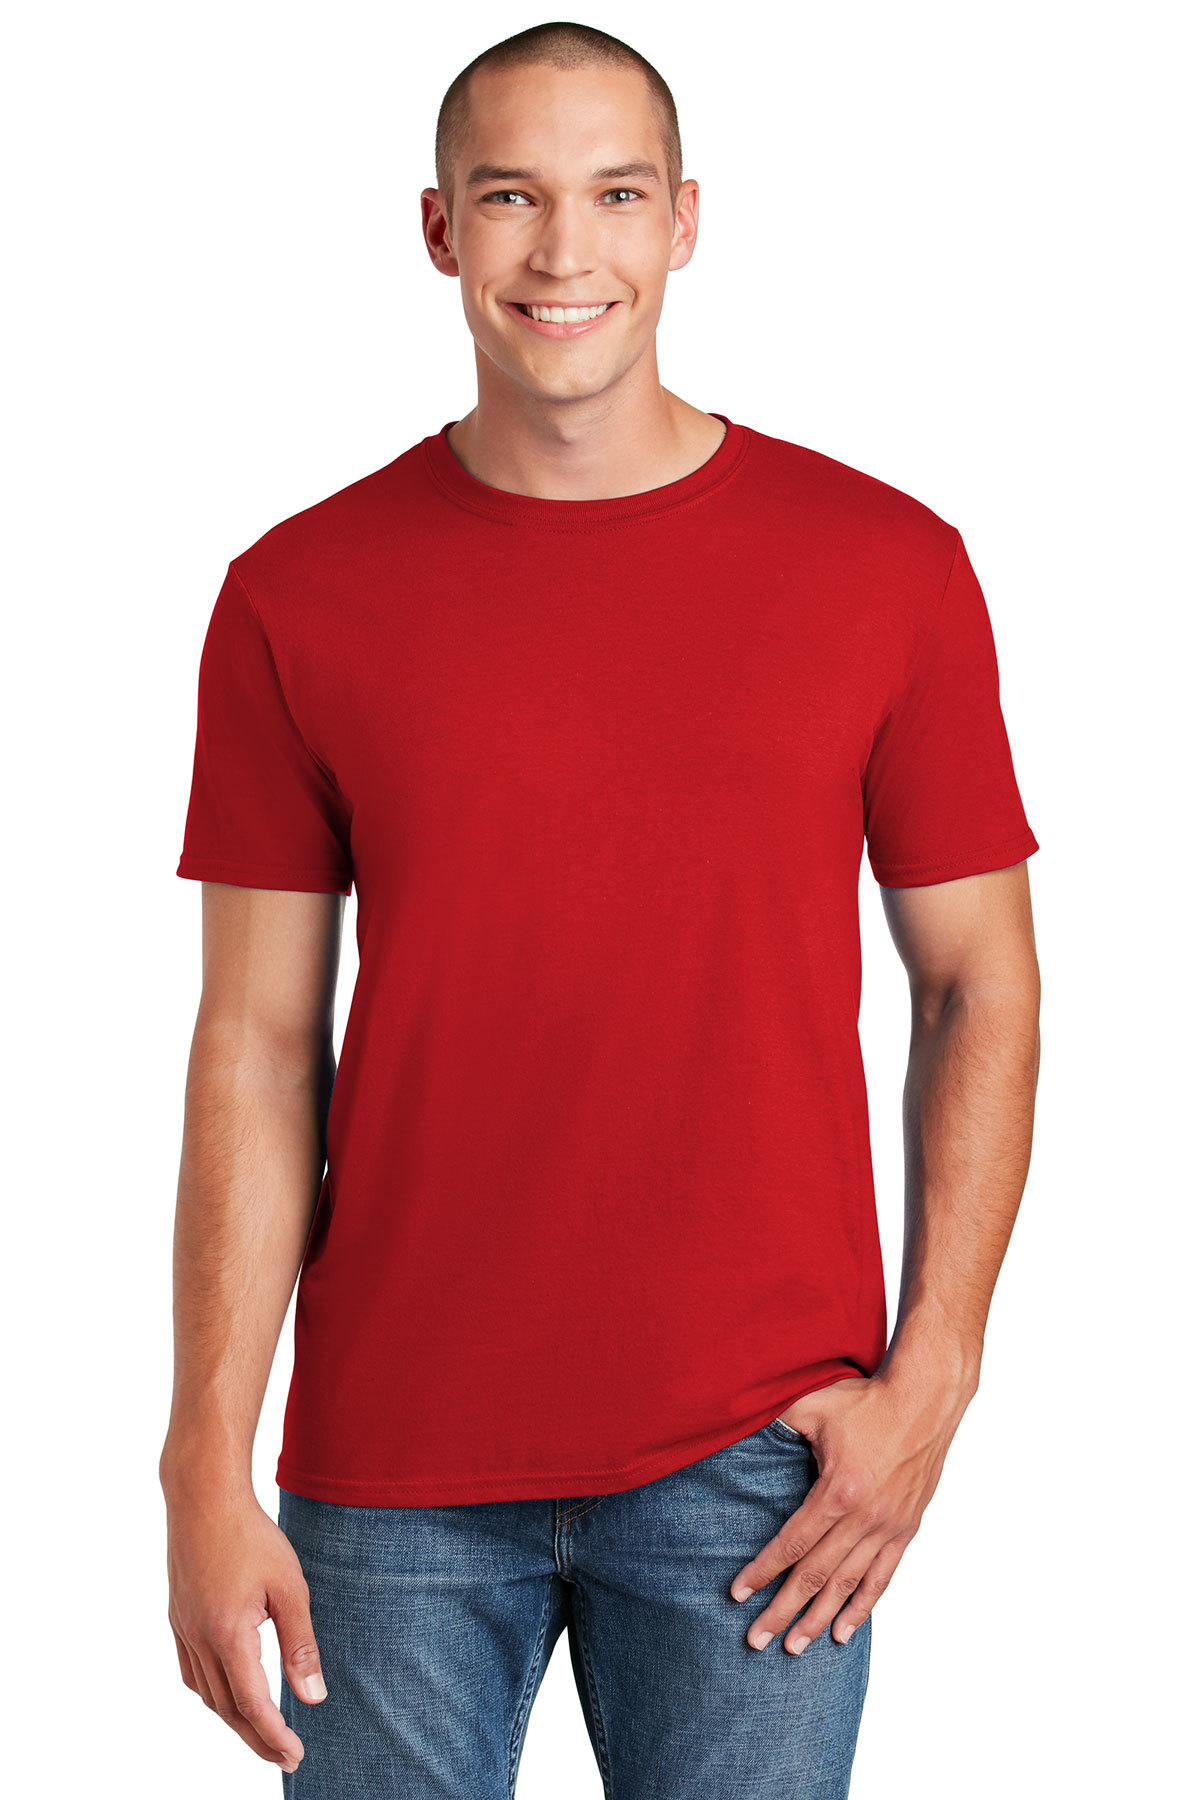 gildan cherry red t shirt